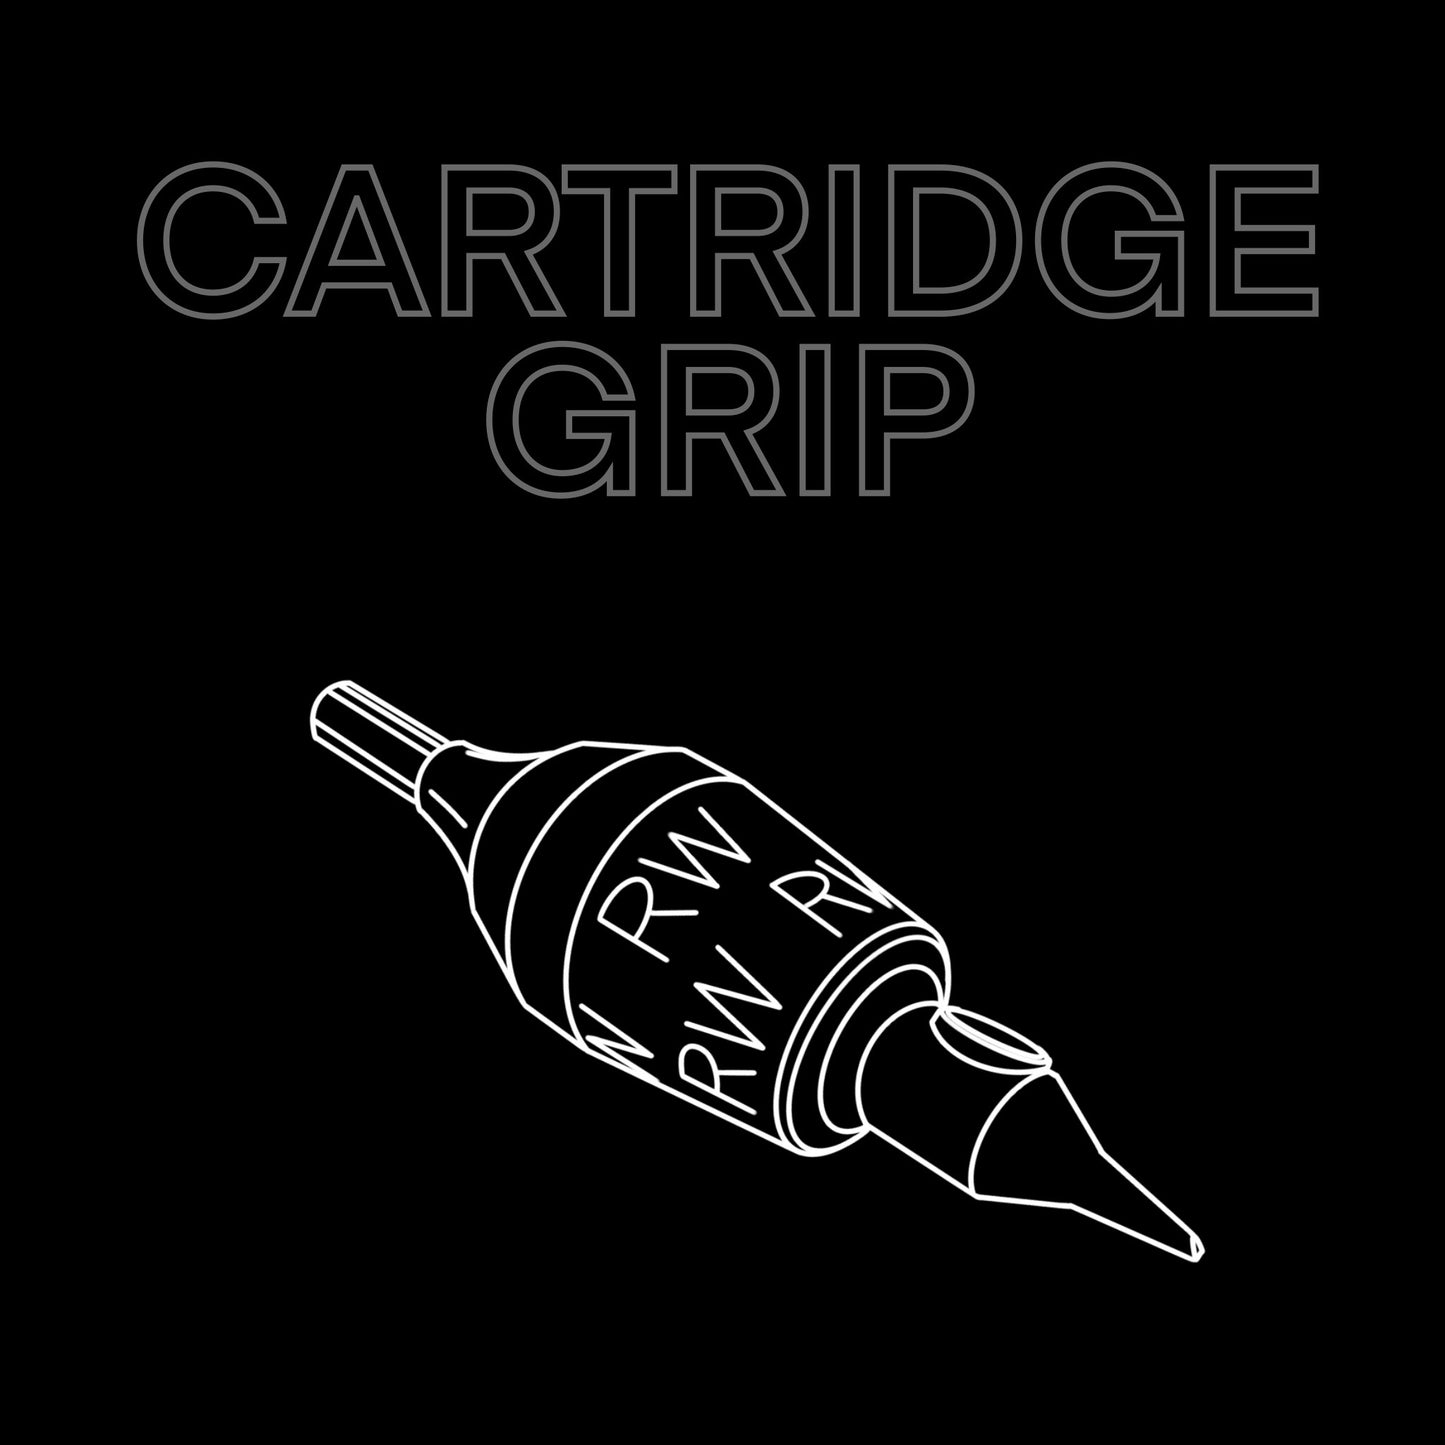 Cartridge grip